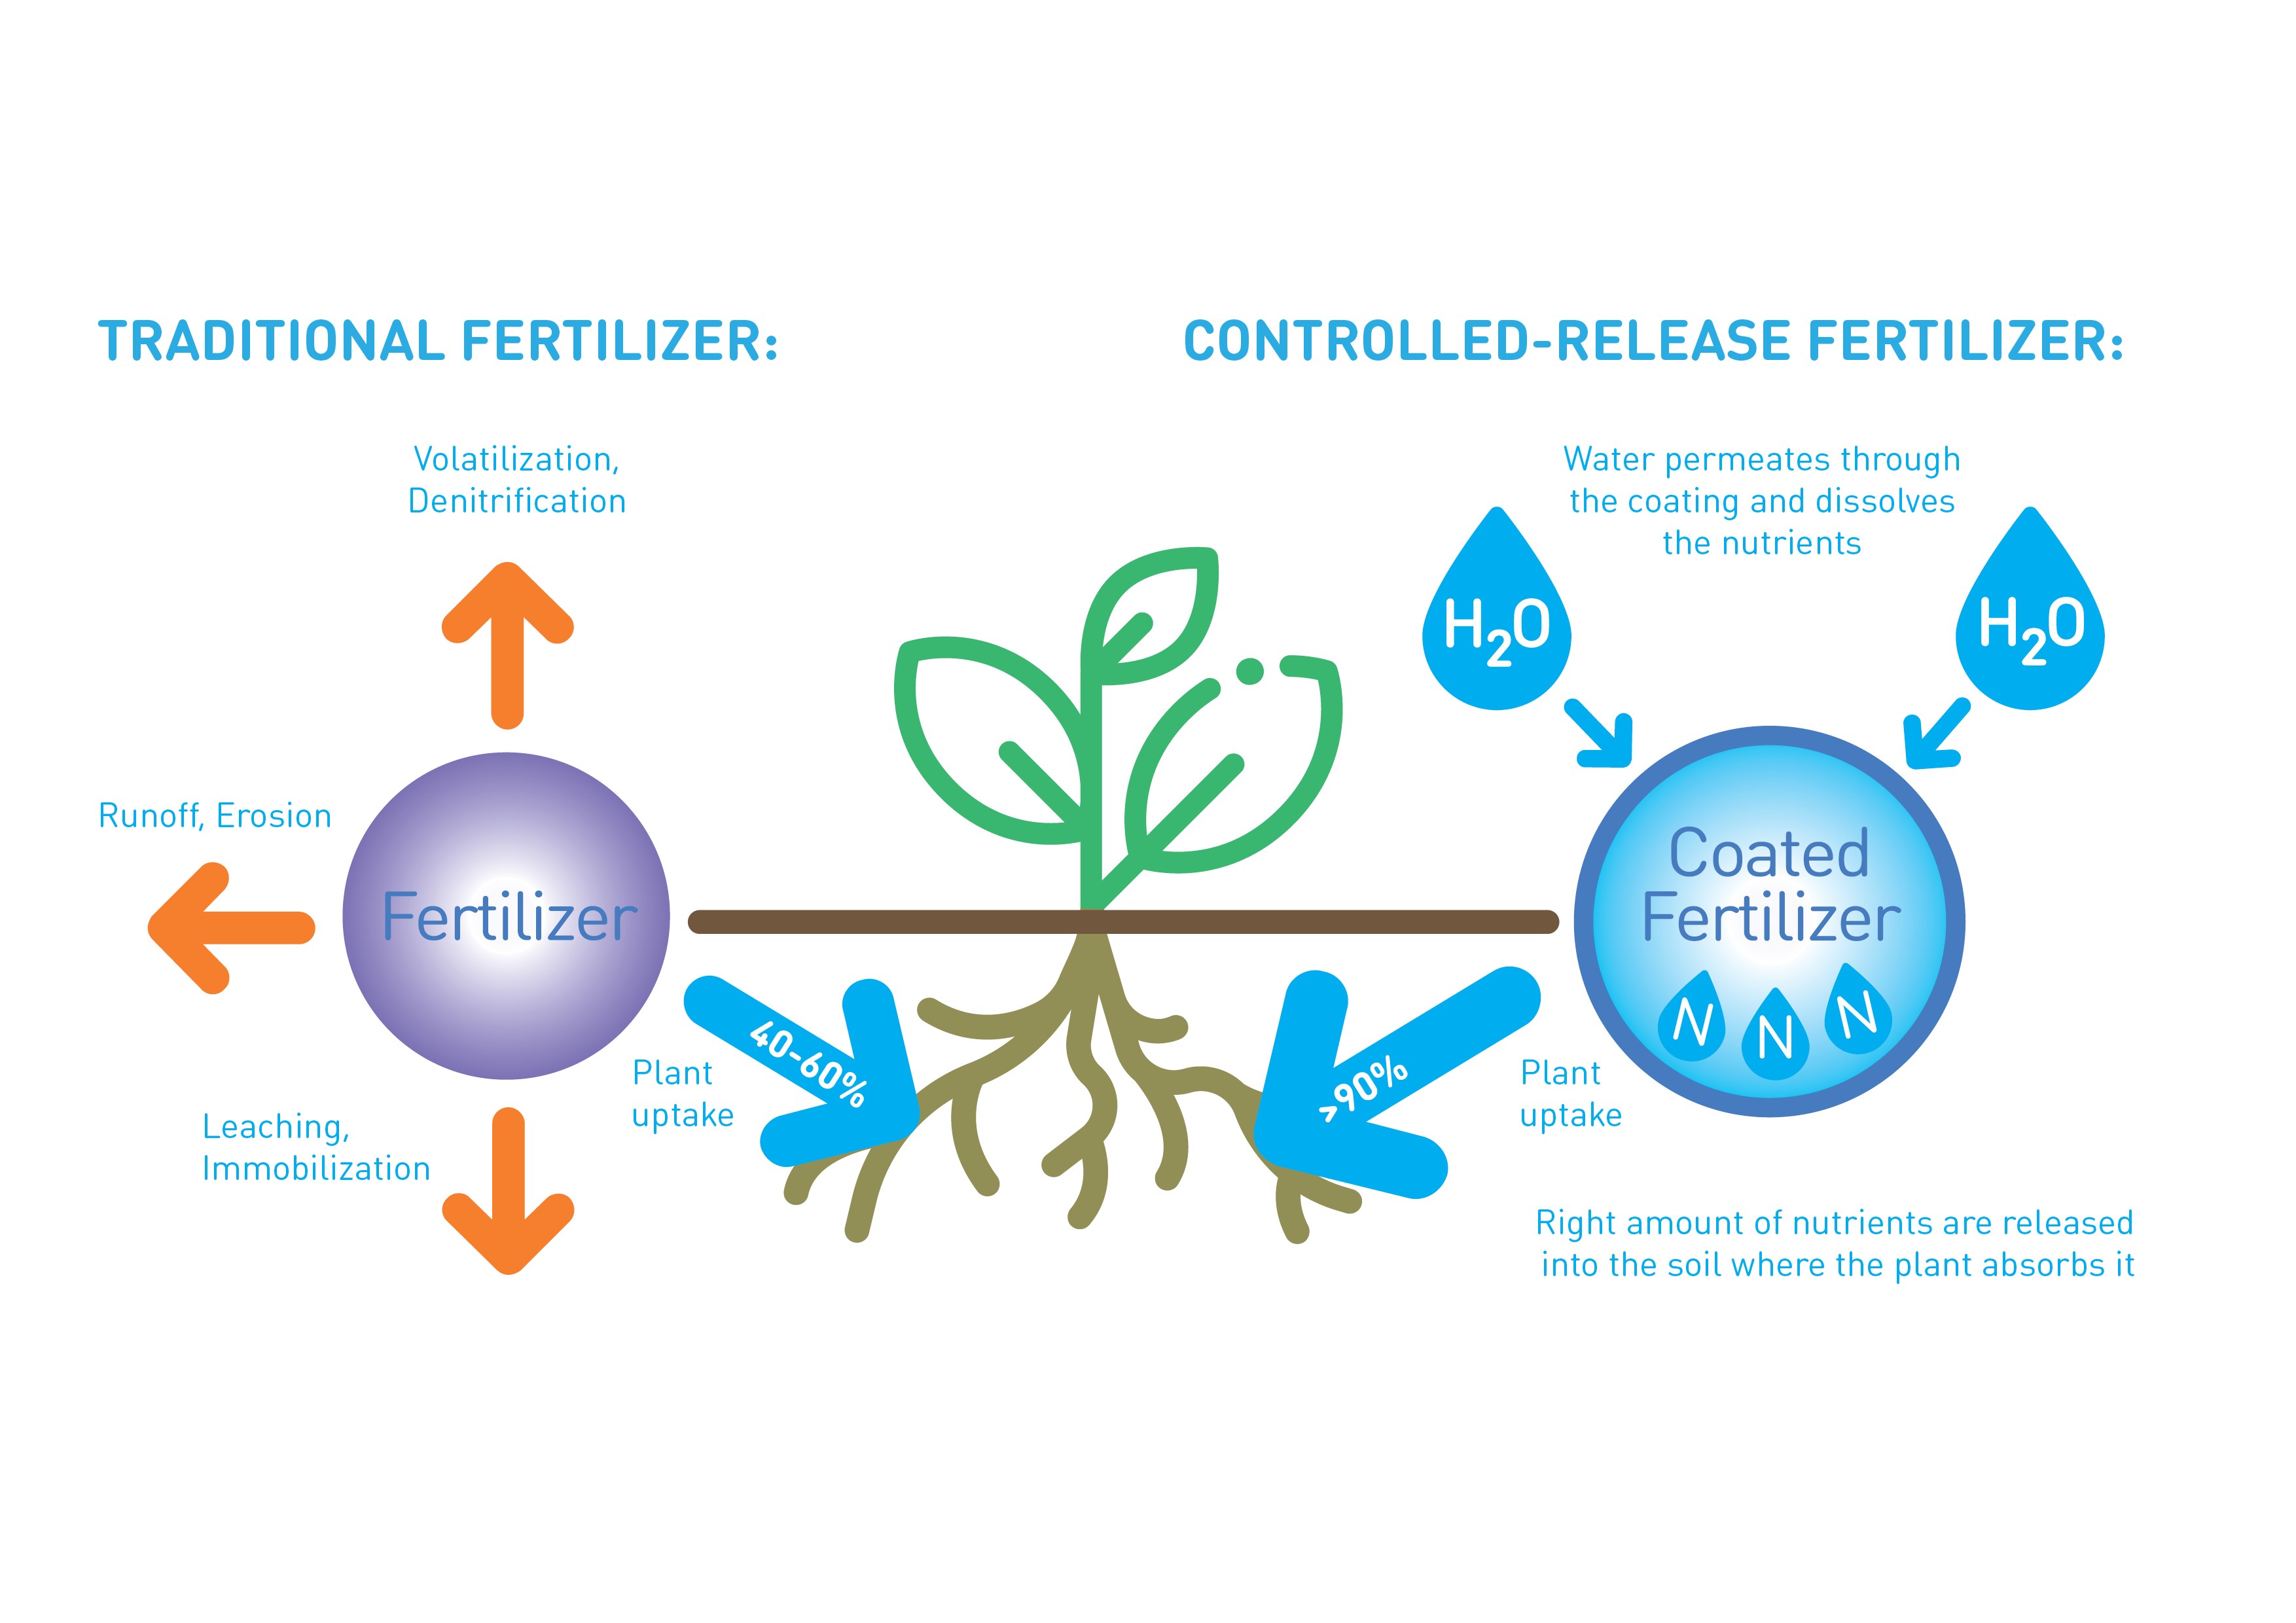 Traditional fertilizer vs. Controlled-release fertilizer